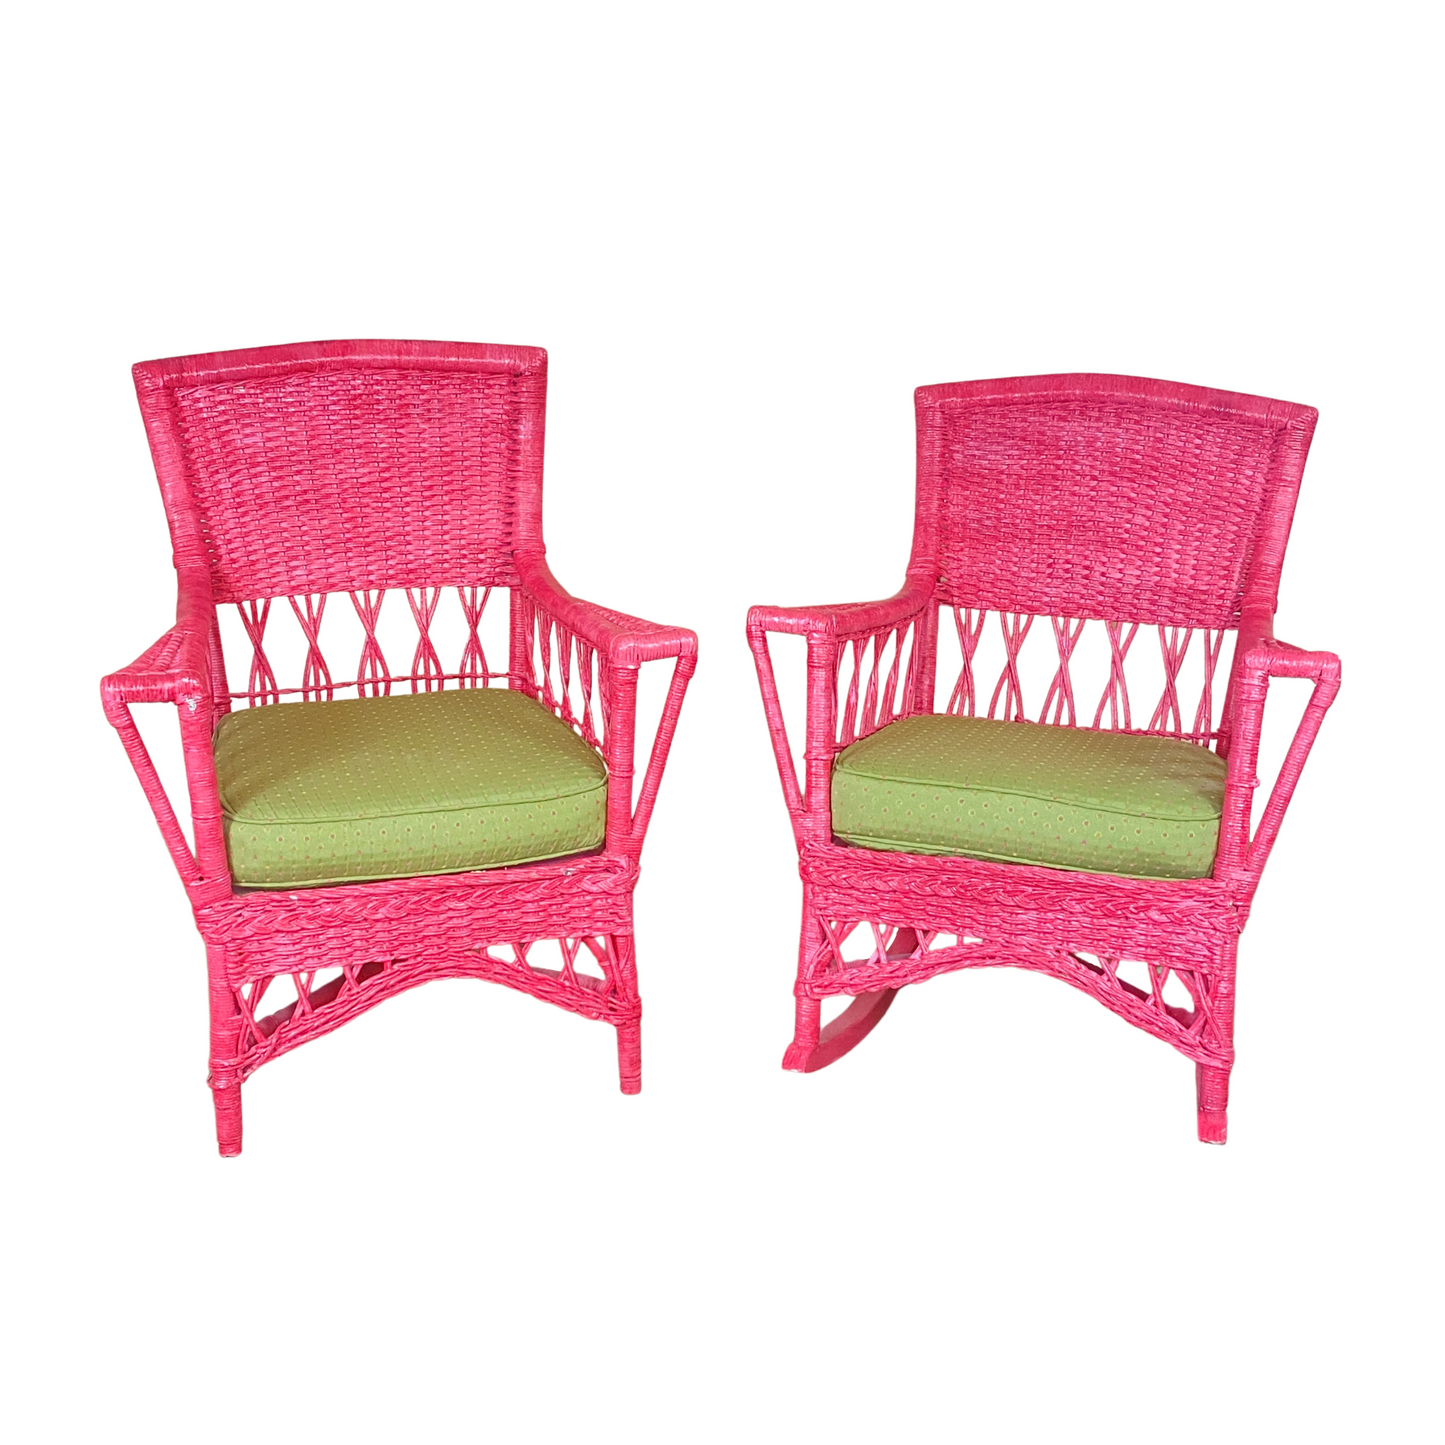 Antique Hot Pink Wicker Arm Chair & Rocker